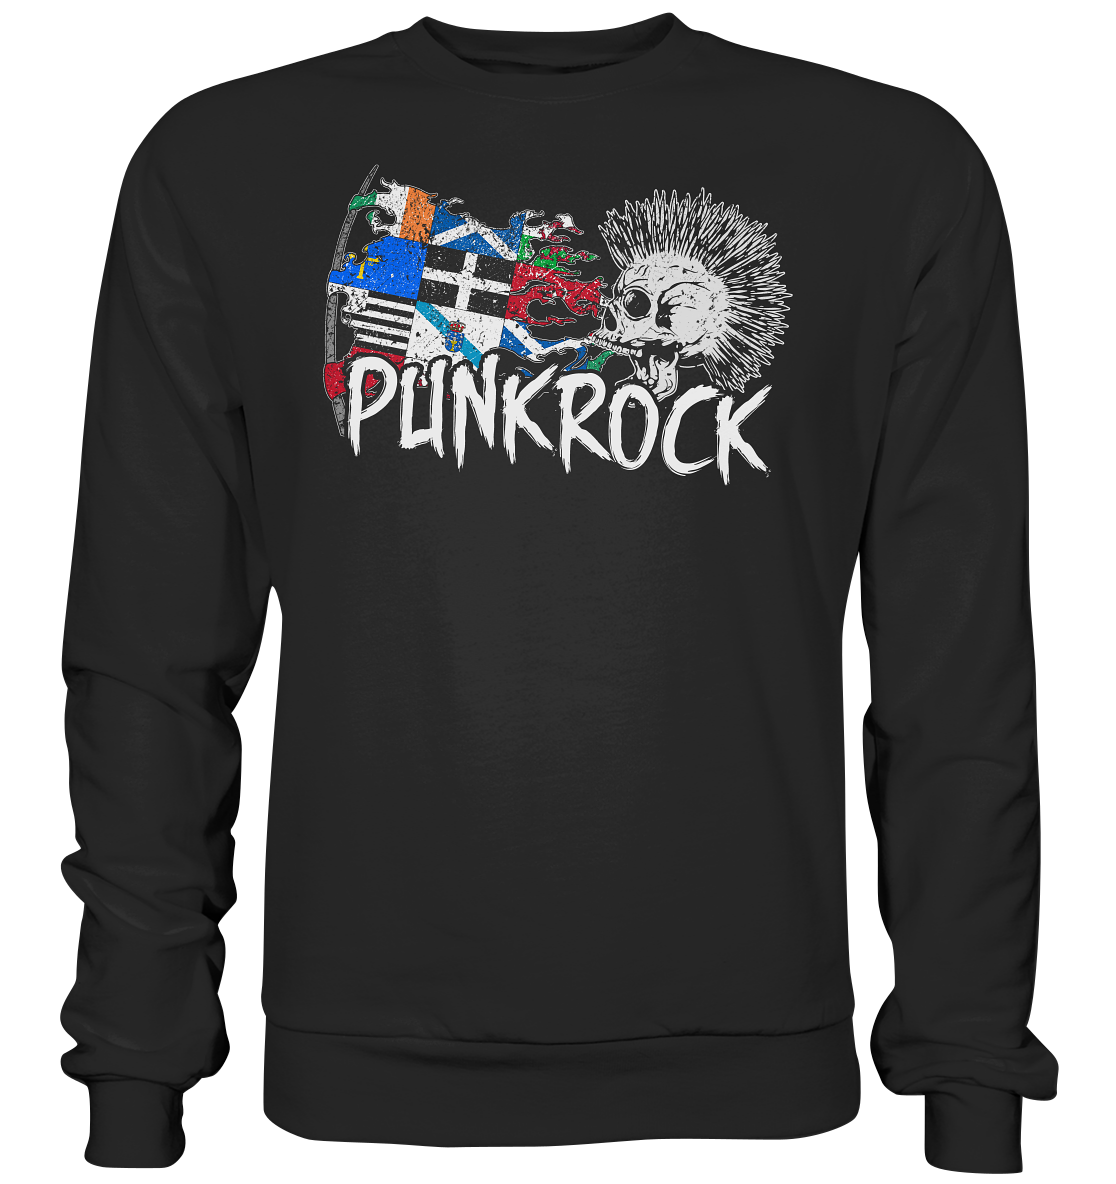 Punkrock "Celtic Nations" - Premium Sweatshirt